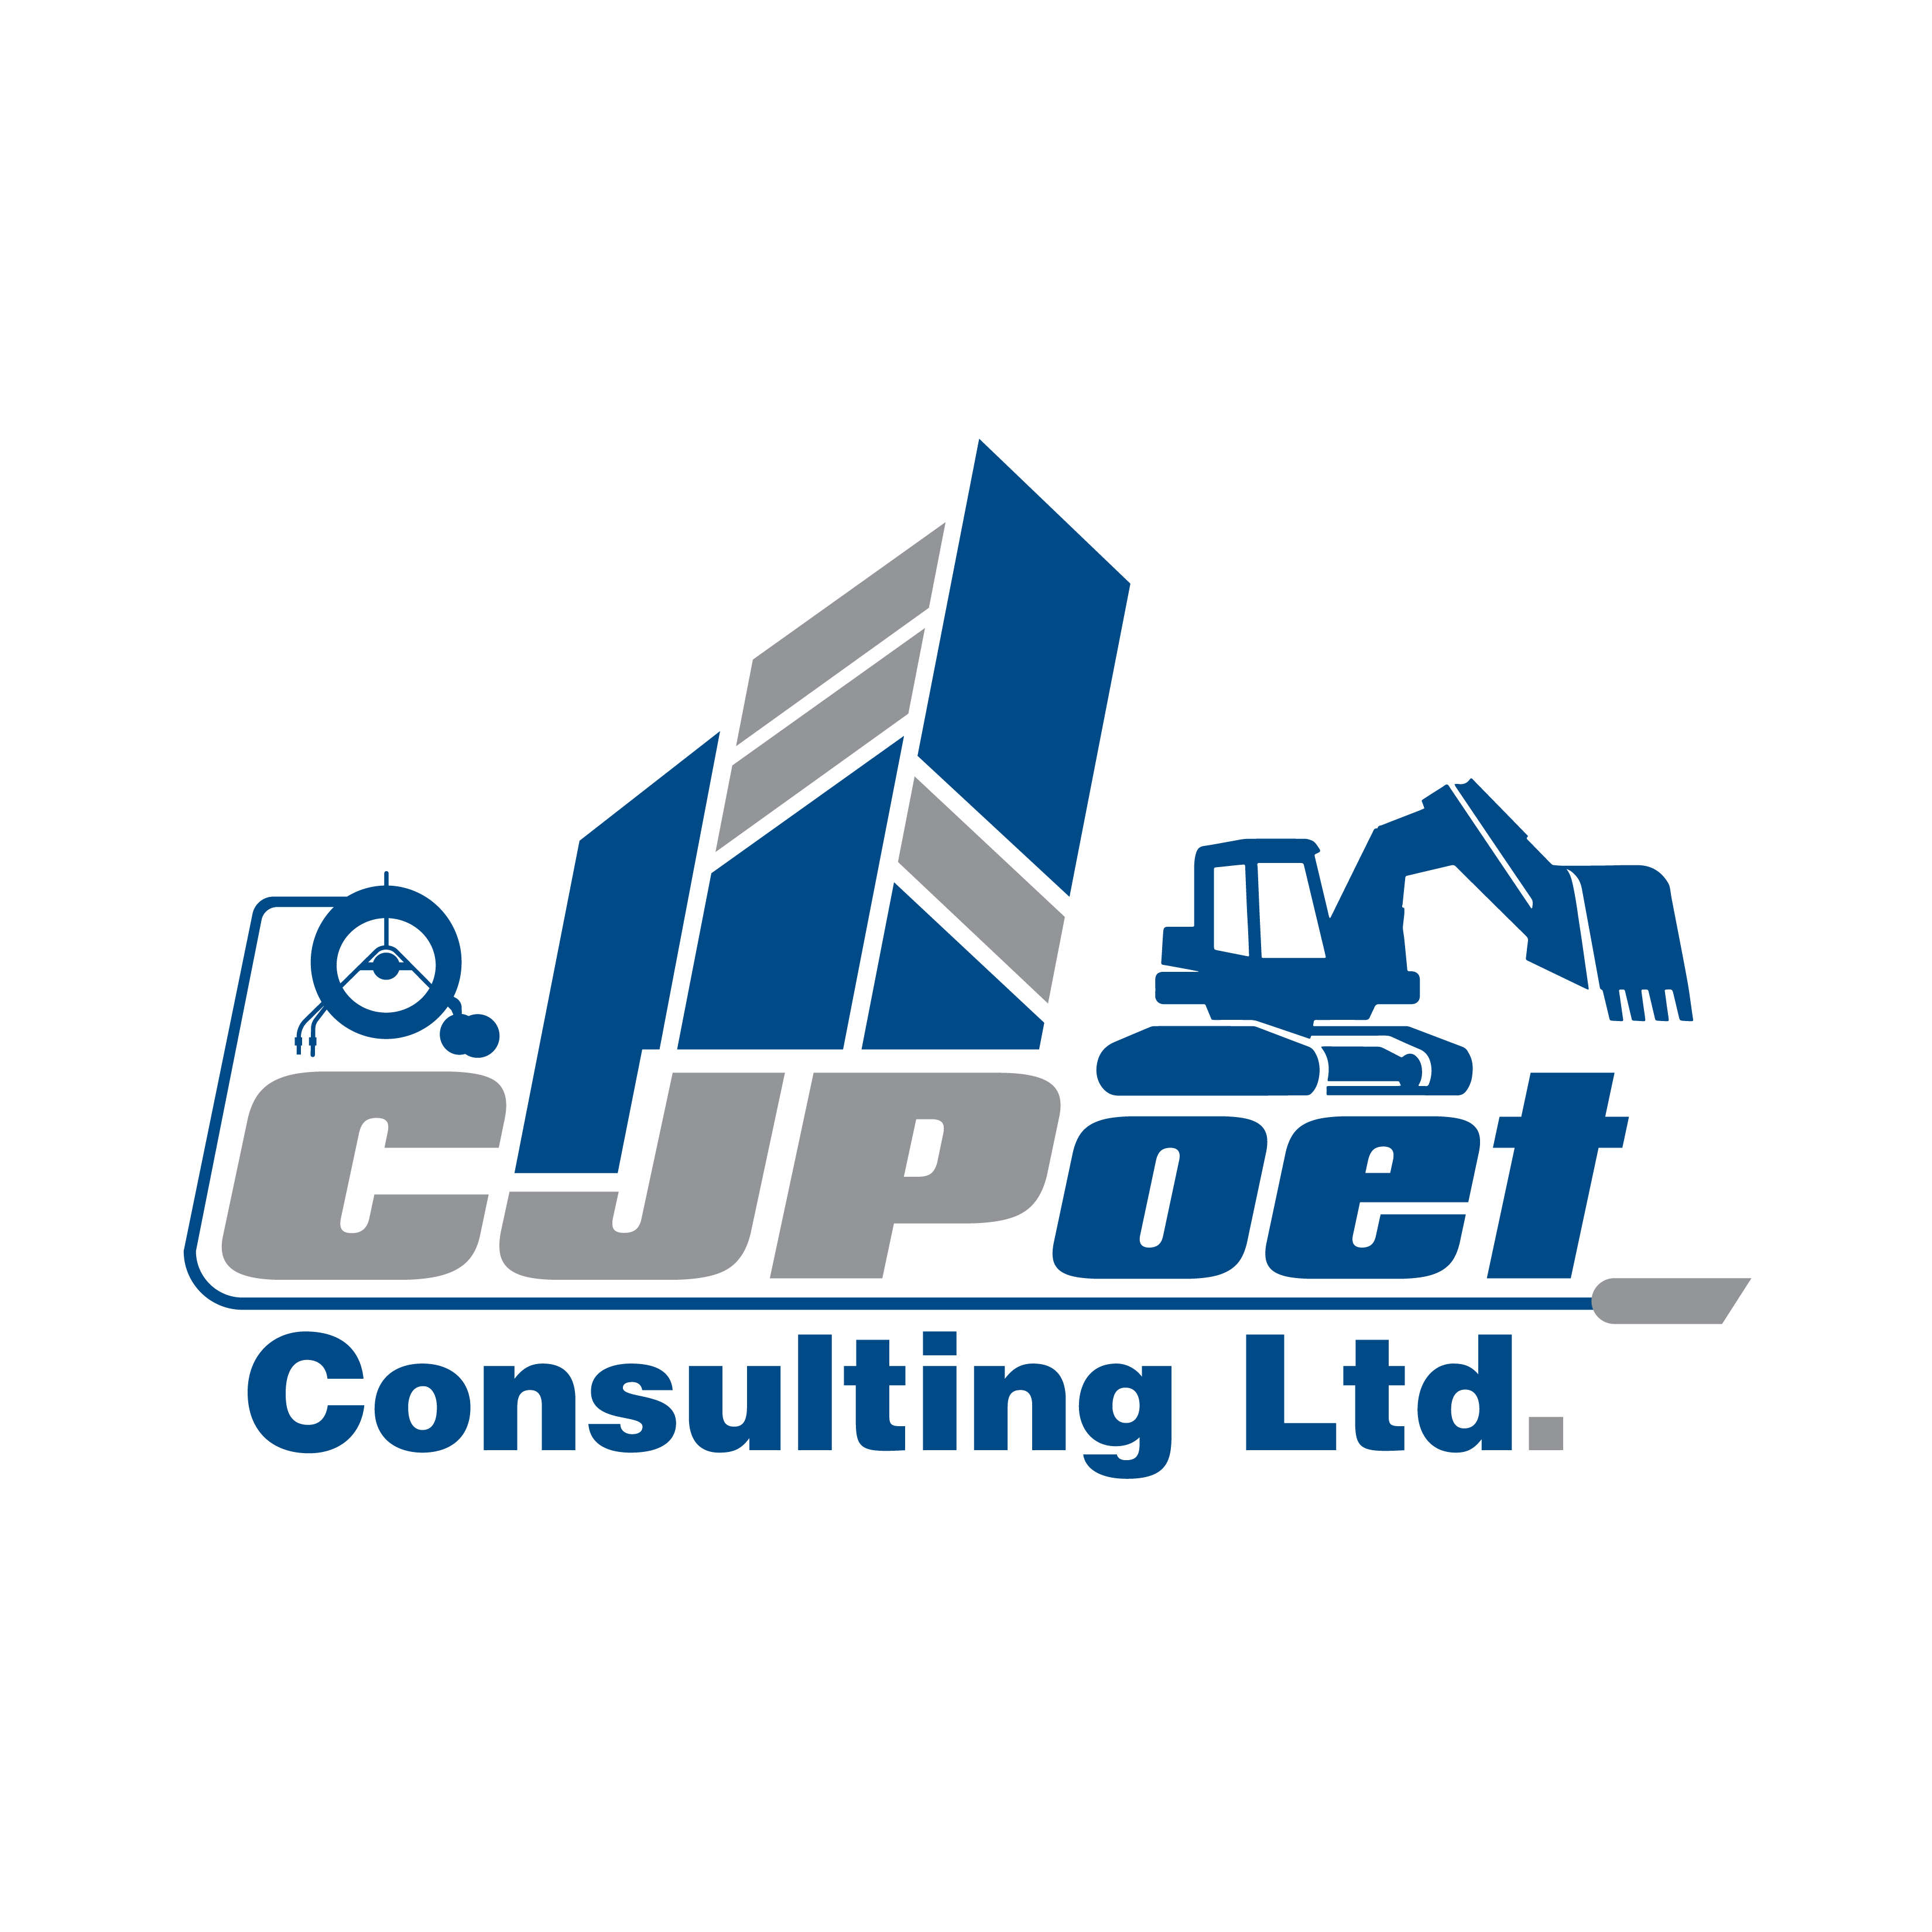 CJPoet Consulting Ltd Logo